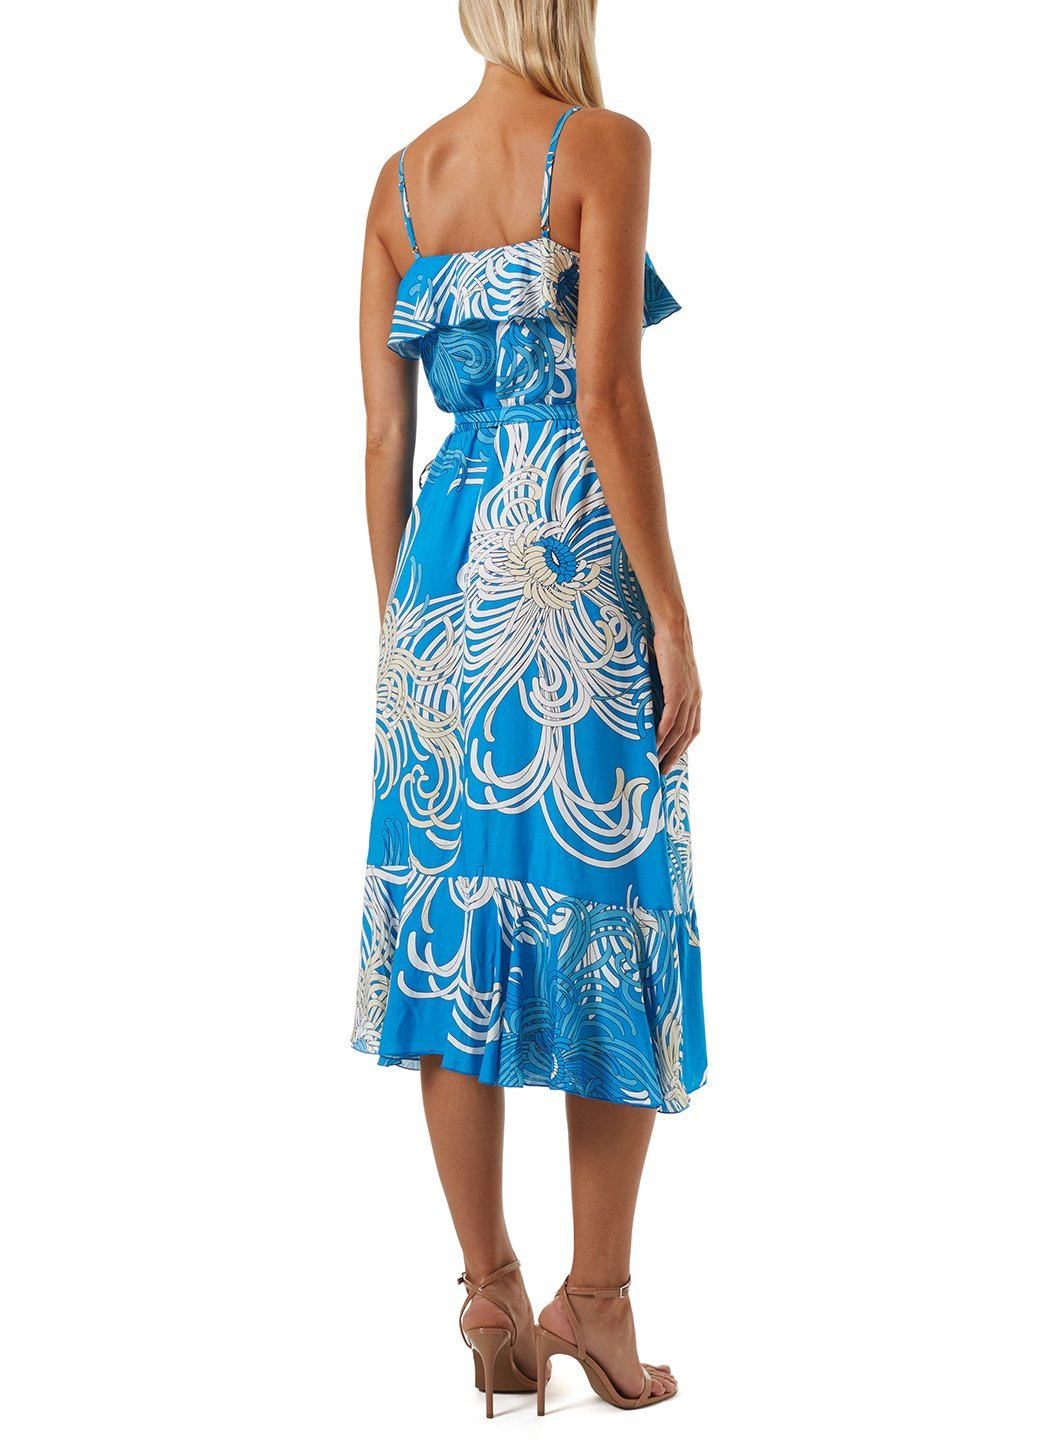 Kiwi Blue Swirl Dress